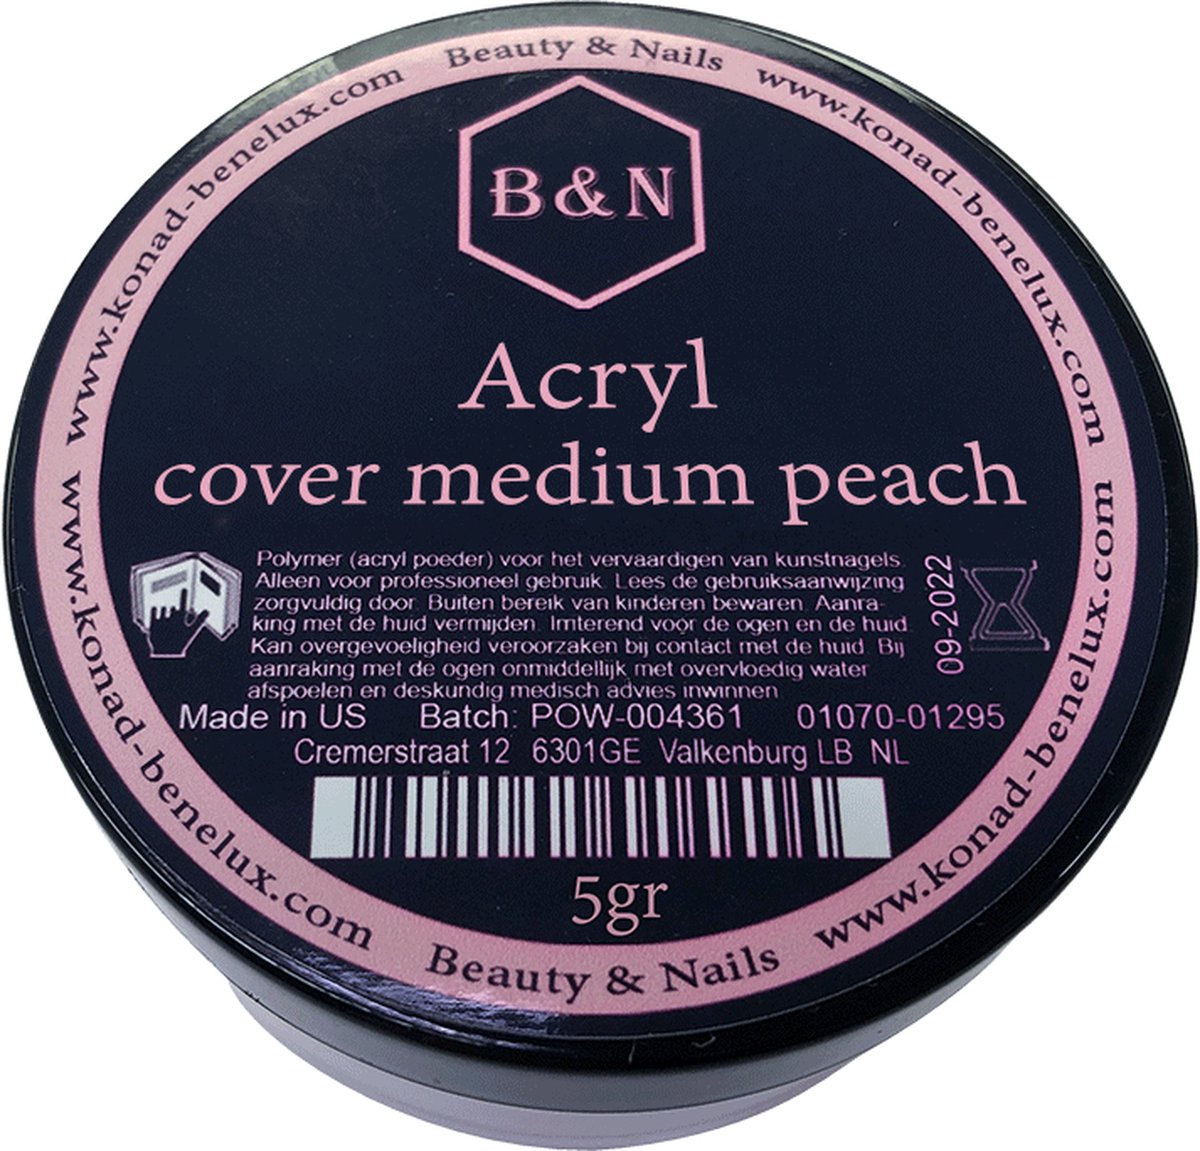 Acryl - cover medium peach - 5 gr | B&N - acrylpoeder - VEGAN - acrylpoeder